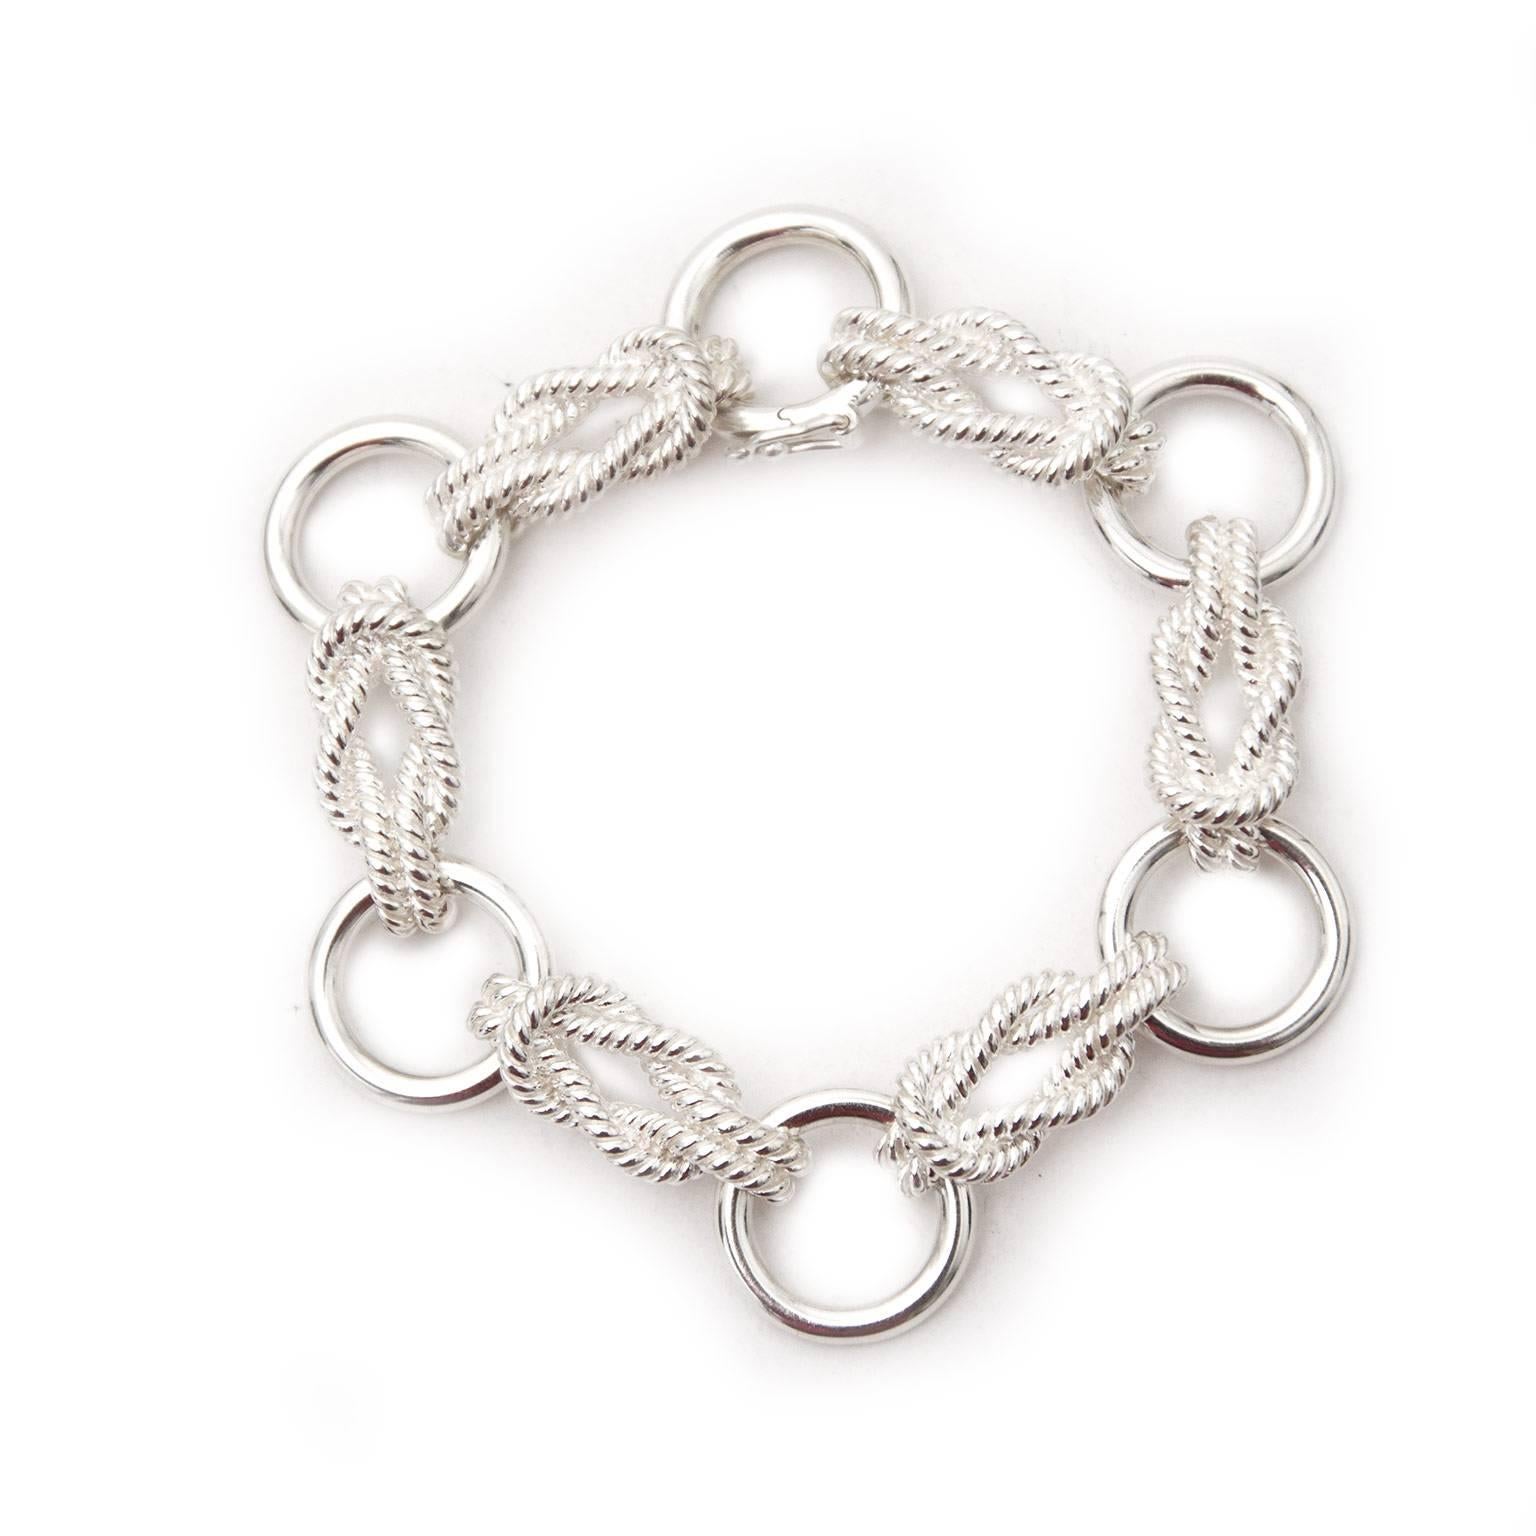 sailor knot bracelet silver